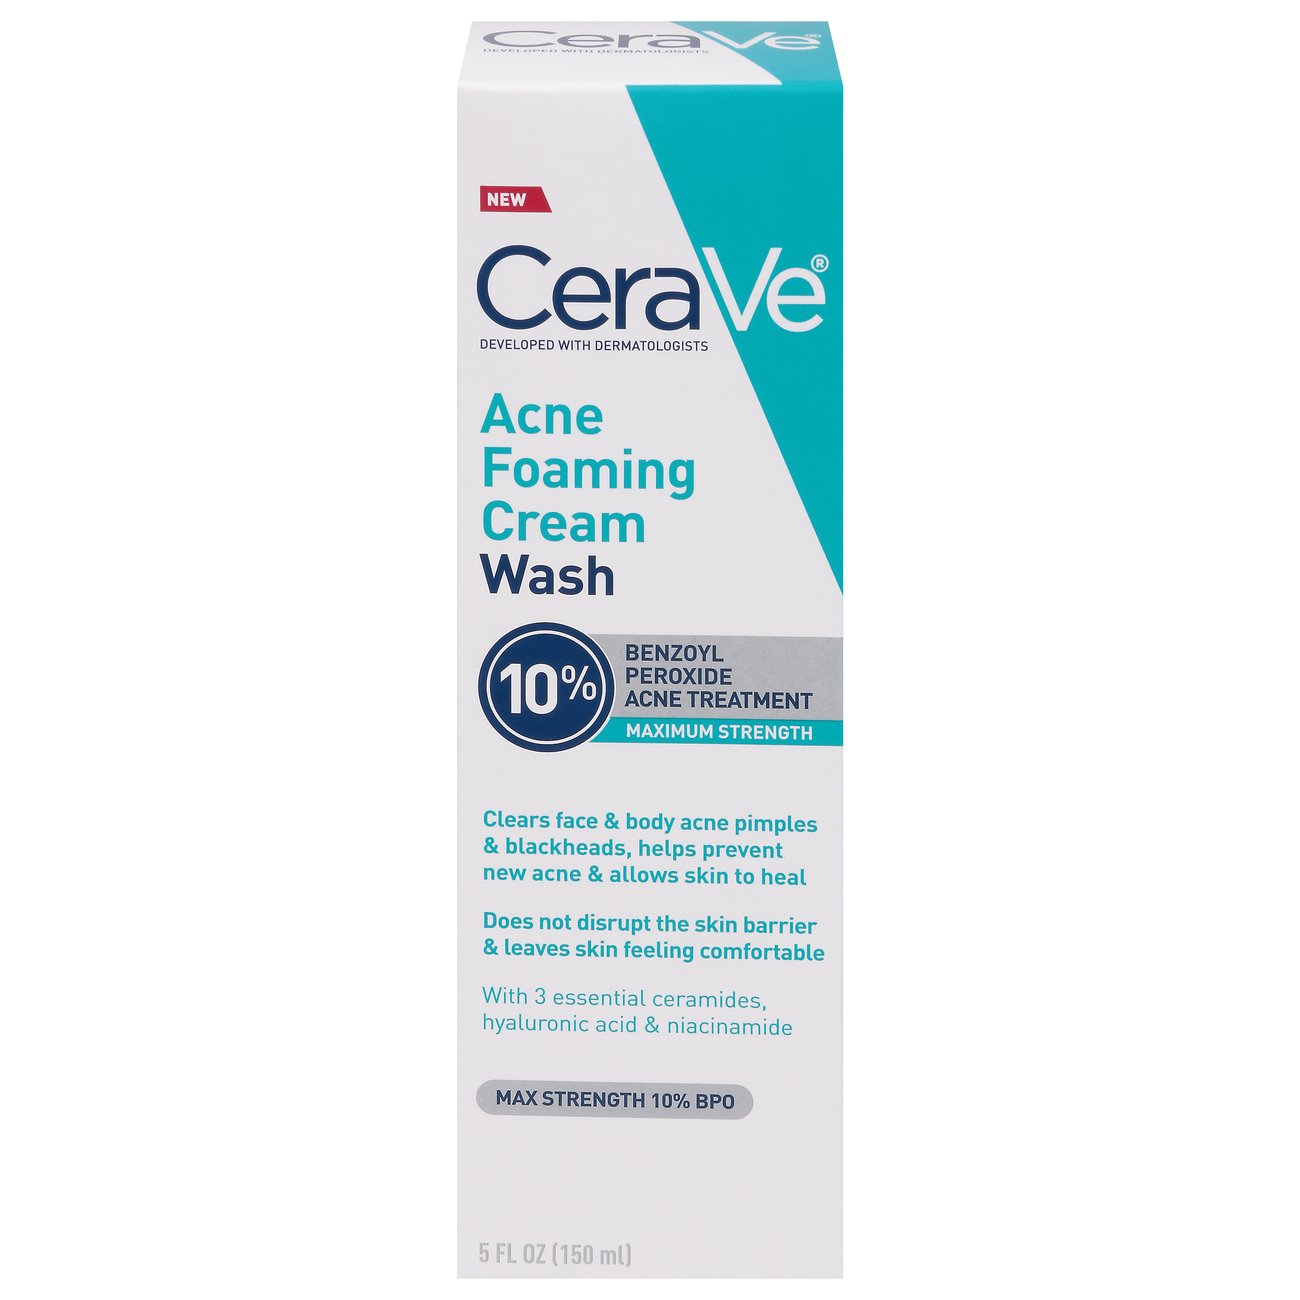 CeraVe México - Acne Foaming Cream Cleanser